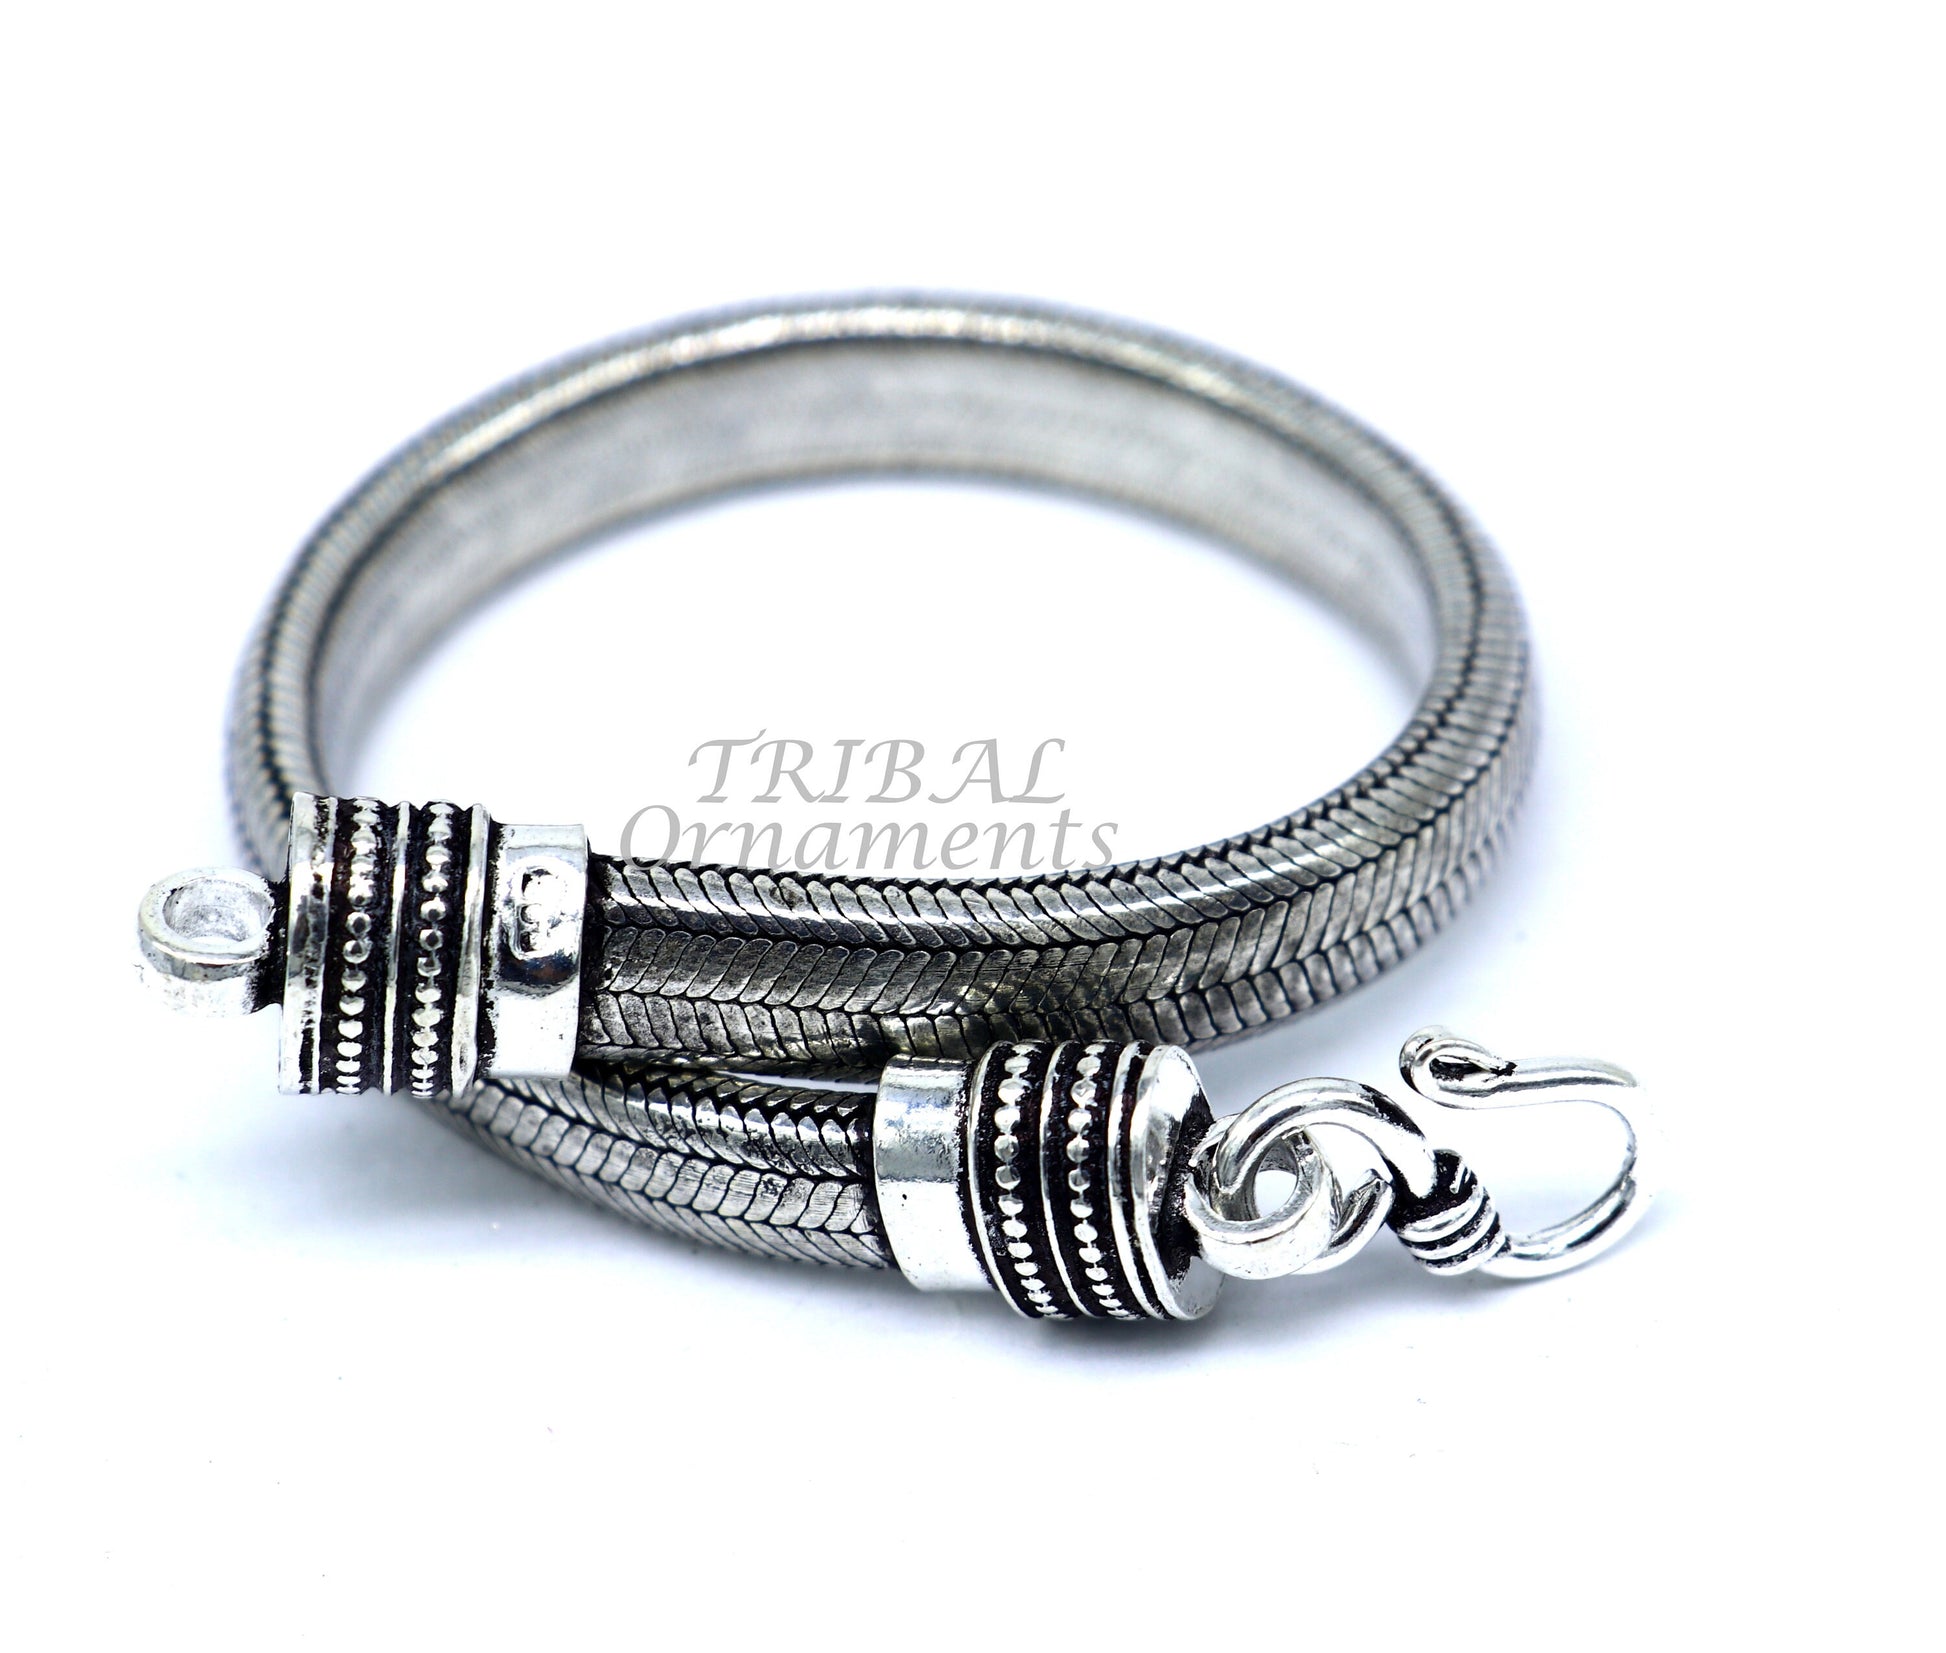 9MM 925 sterling silver handmade amazing snake chain flexible unisex D shape half round bracelet elegant wrist belt bracelet india sbr476 - TRIBAL ORNAMENTS